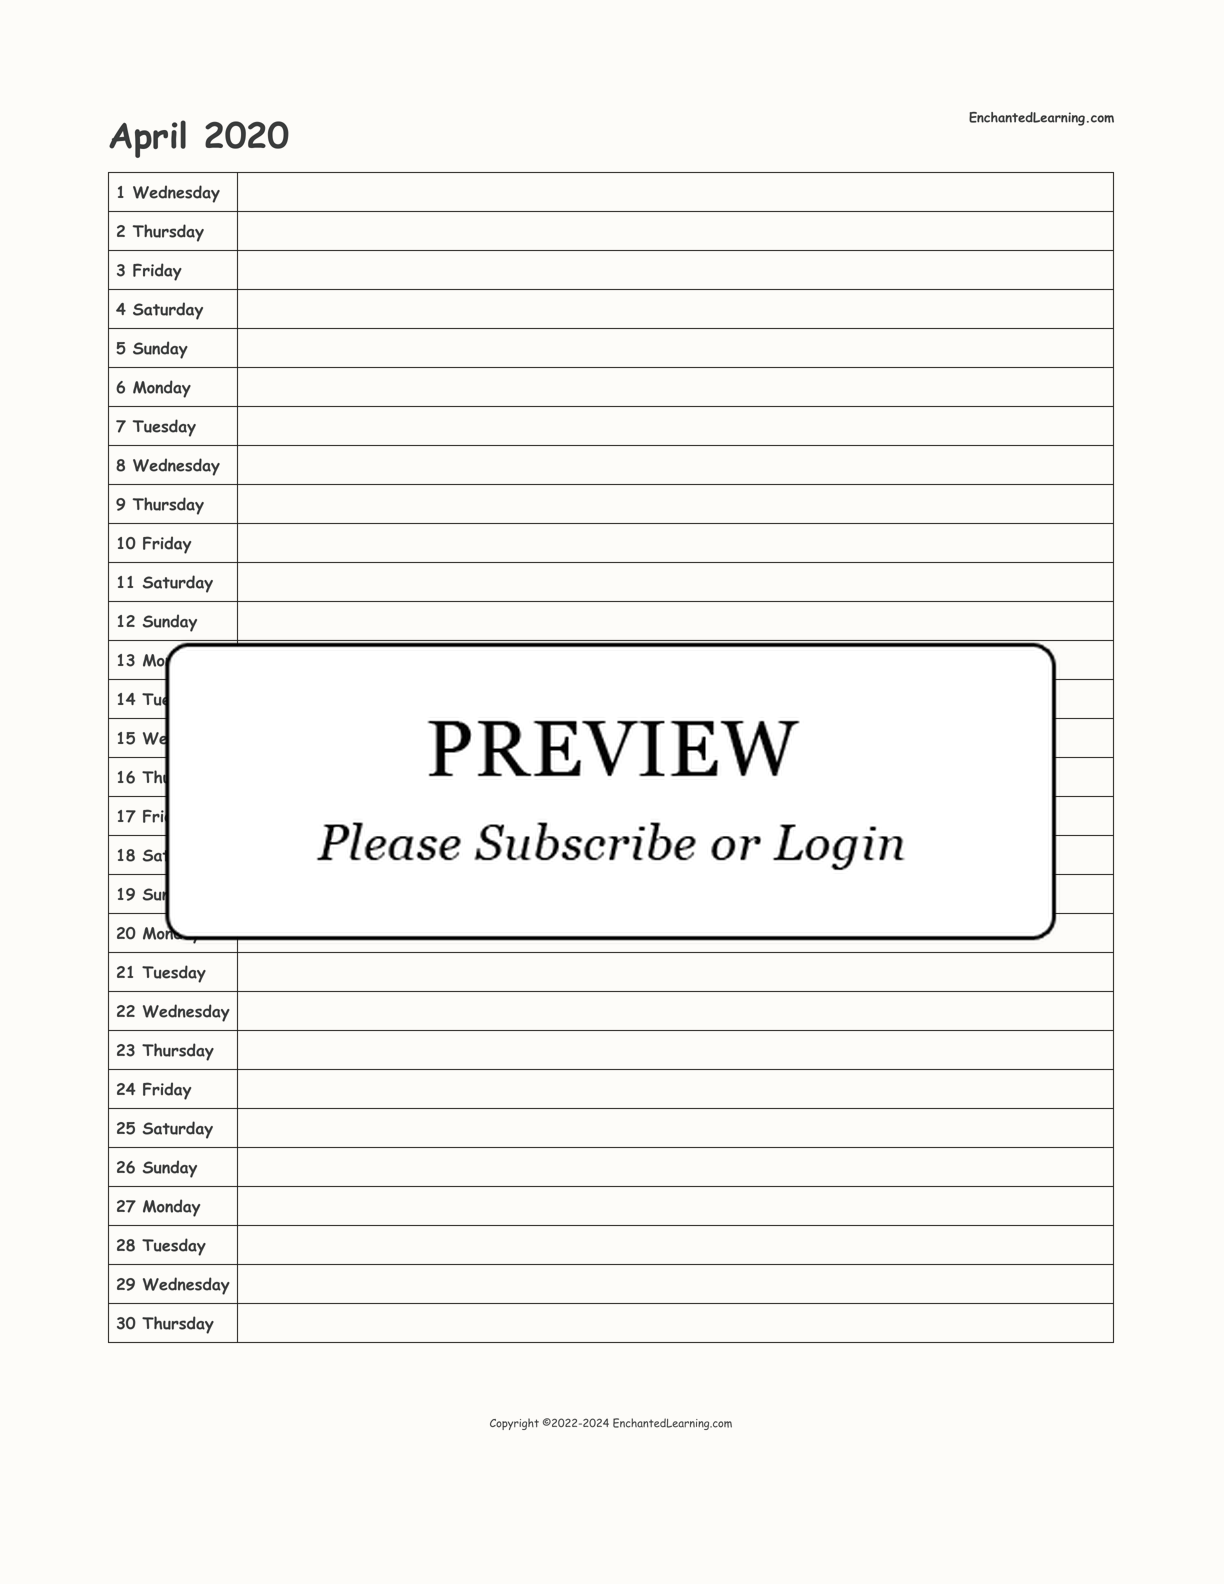 April 2020 Calendar interactive printout page 1